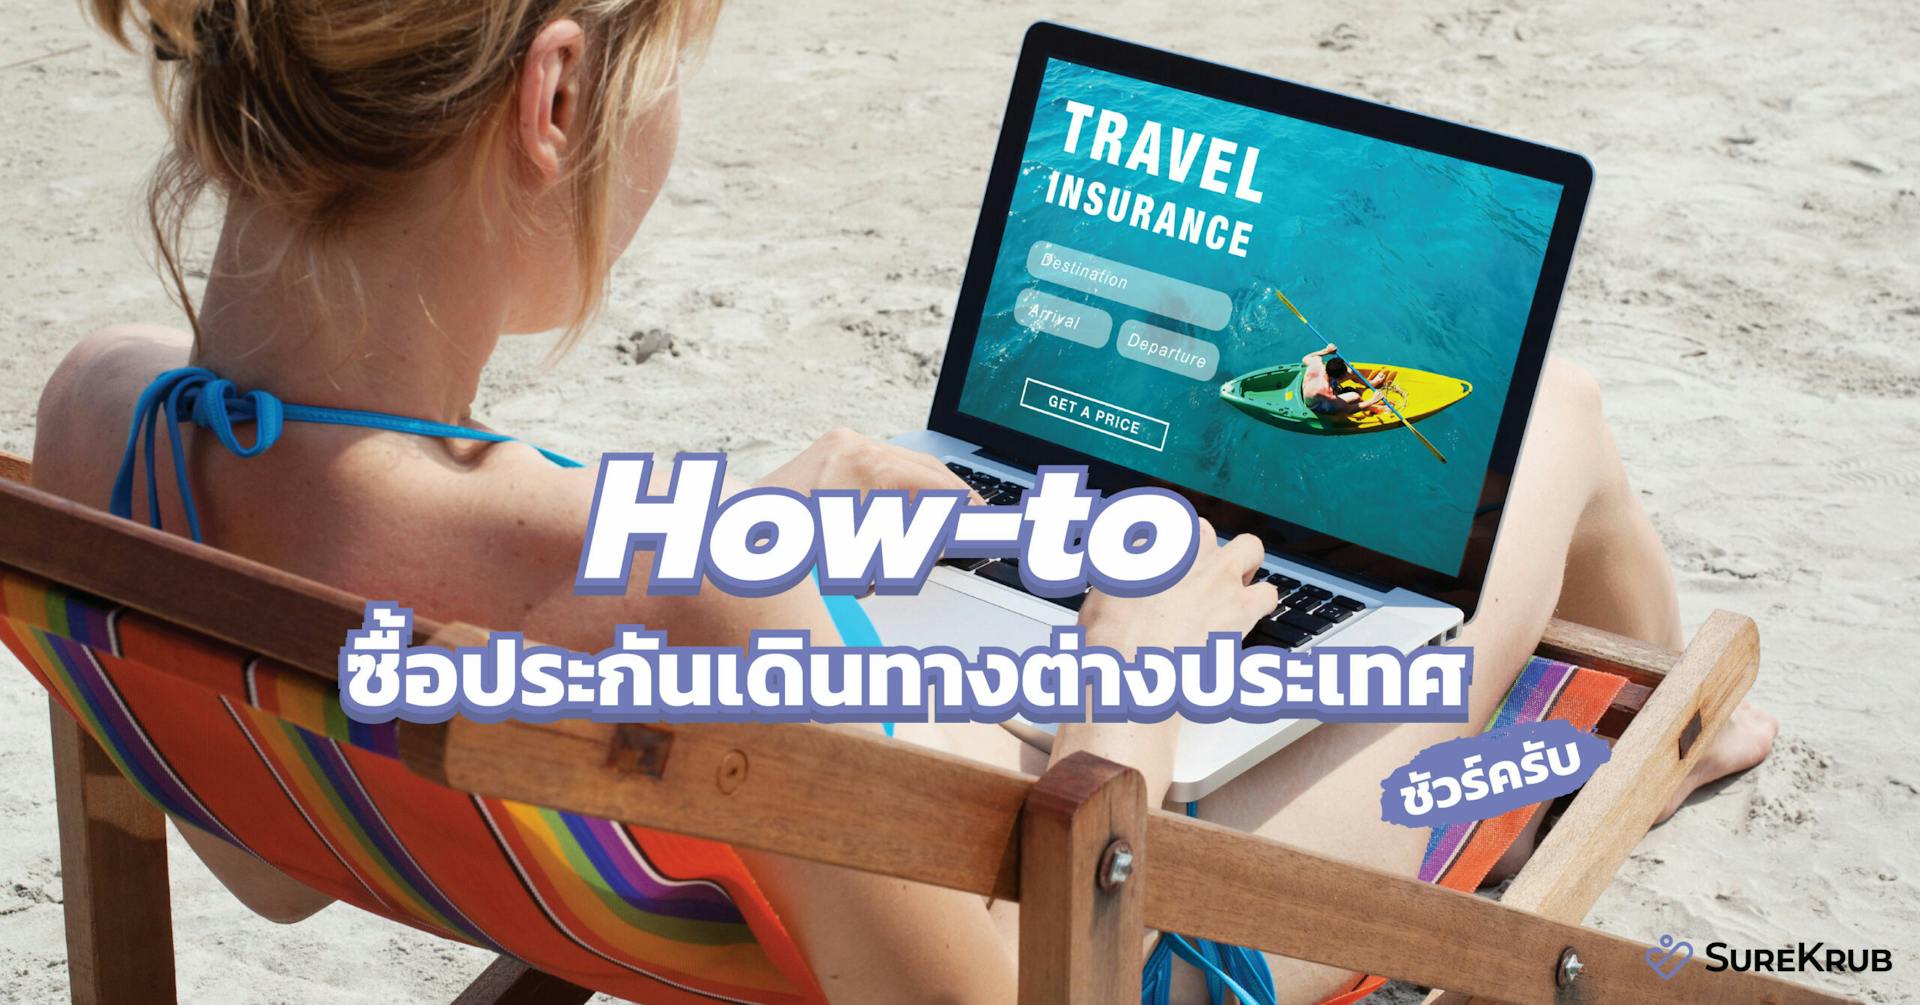 How-to ซื้อประกันเดินทางต่างประเทศ ชัวร์ครับ Travel insurance 3 นาที ได้ชัวร์